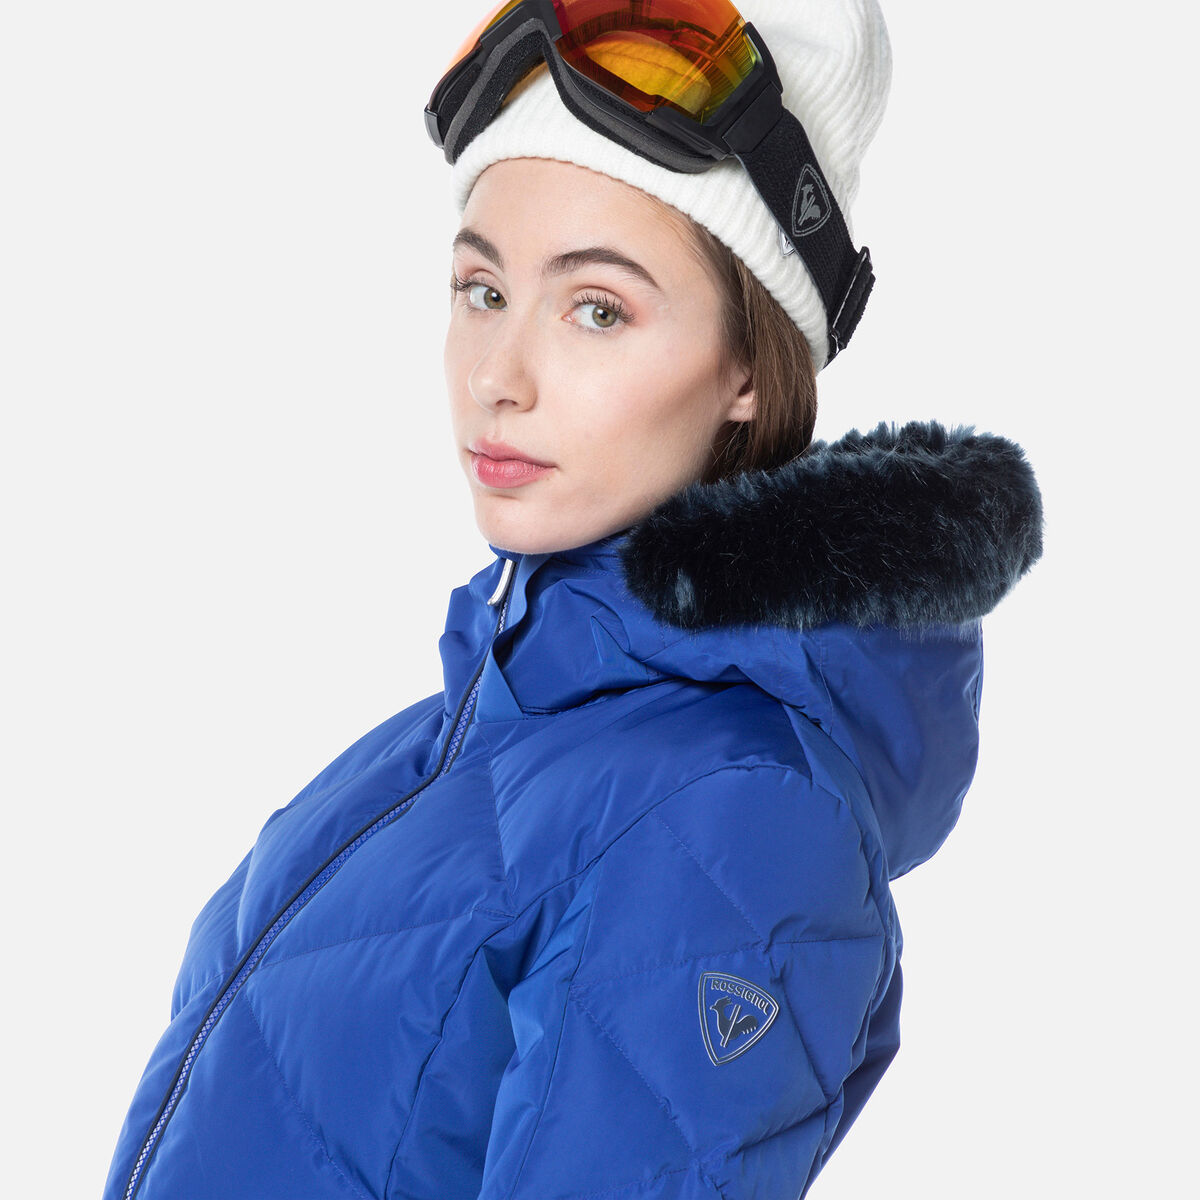 Women's Staci Pearly Ski Jacket | Ski & snowboard jackets | Rossignol